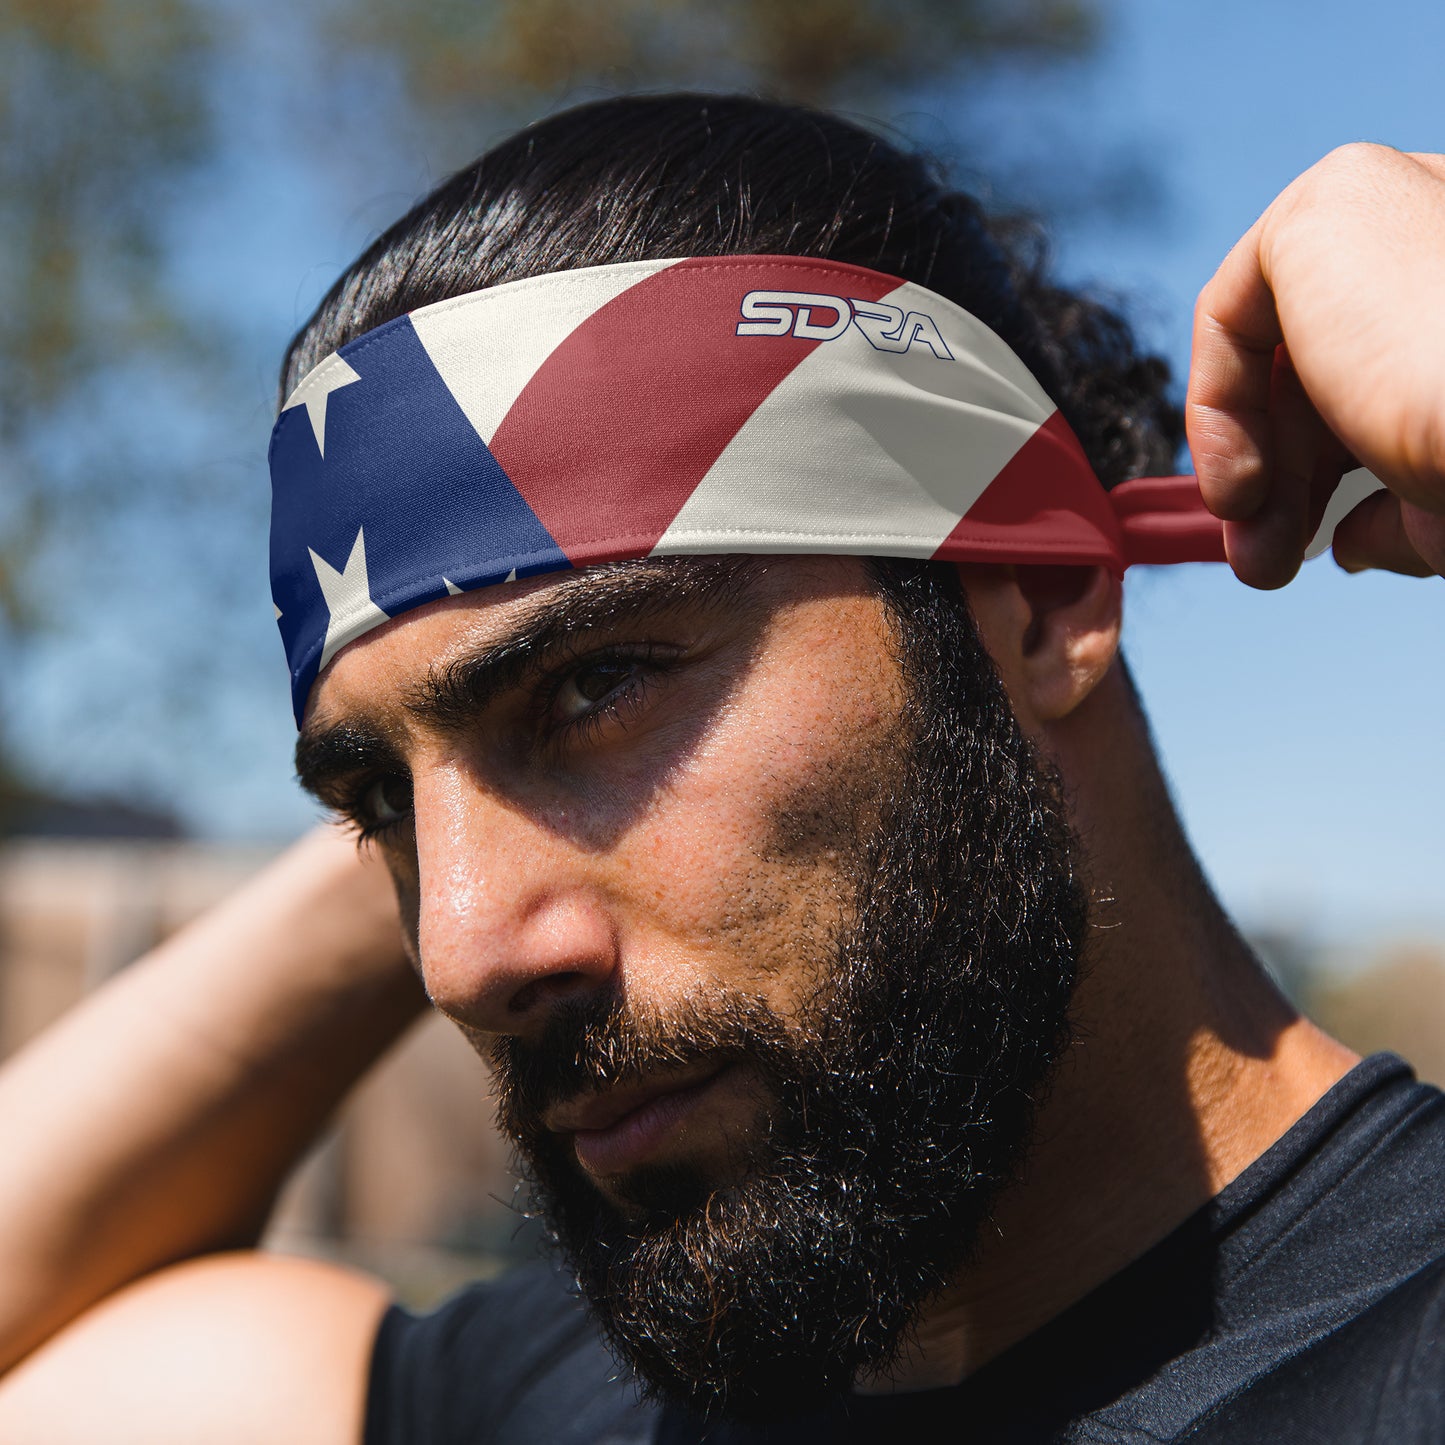 Suddora USA Patriot Tie Headband